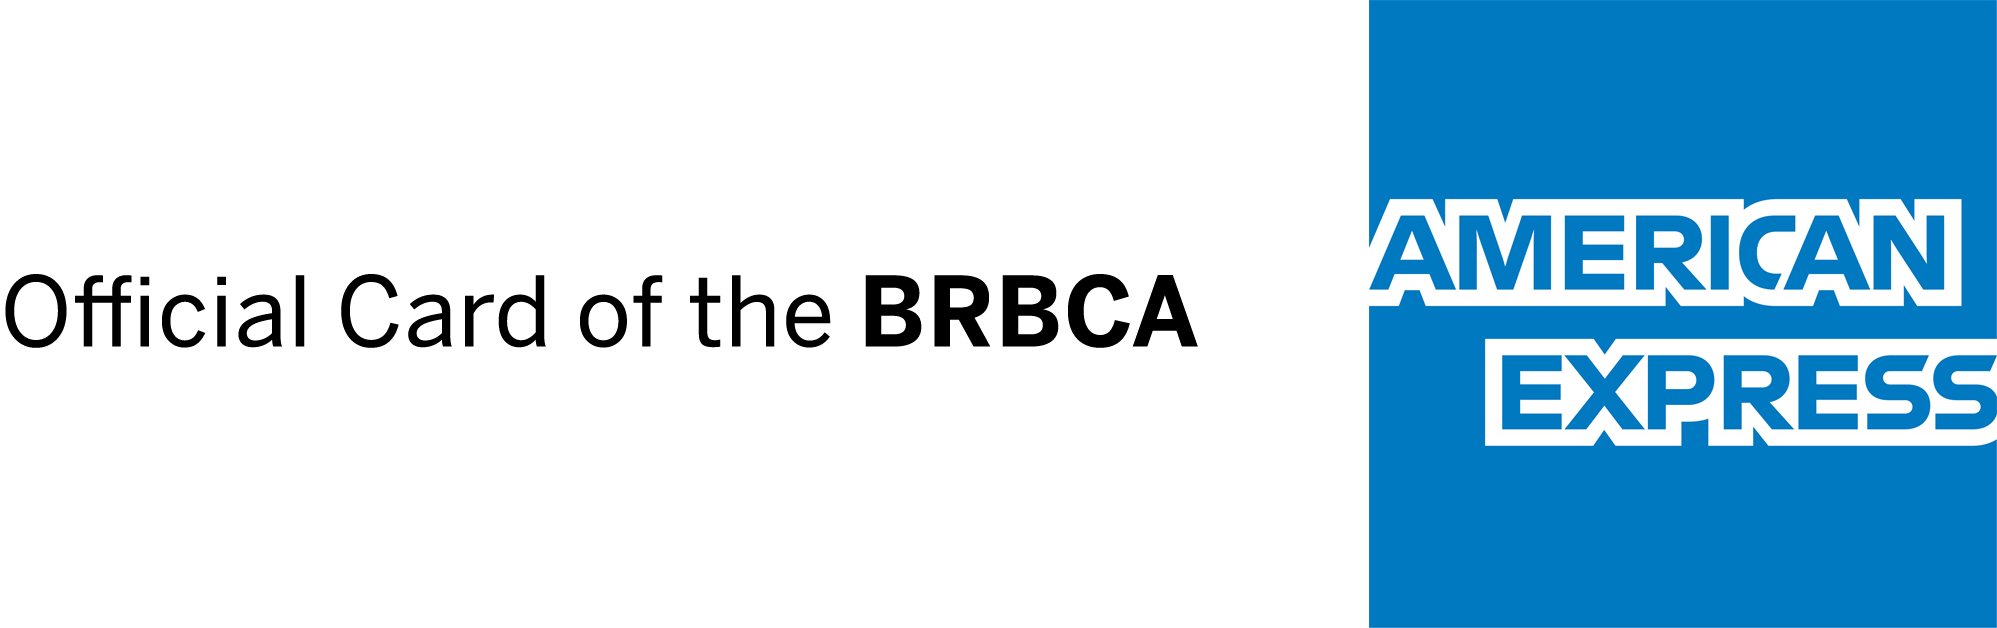 American Express Logo PNG görüntüleri